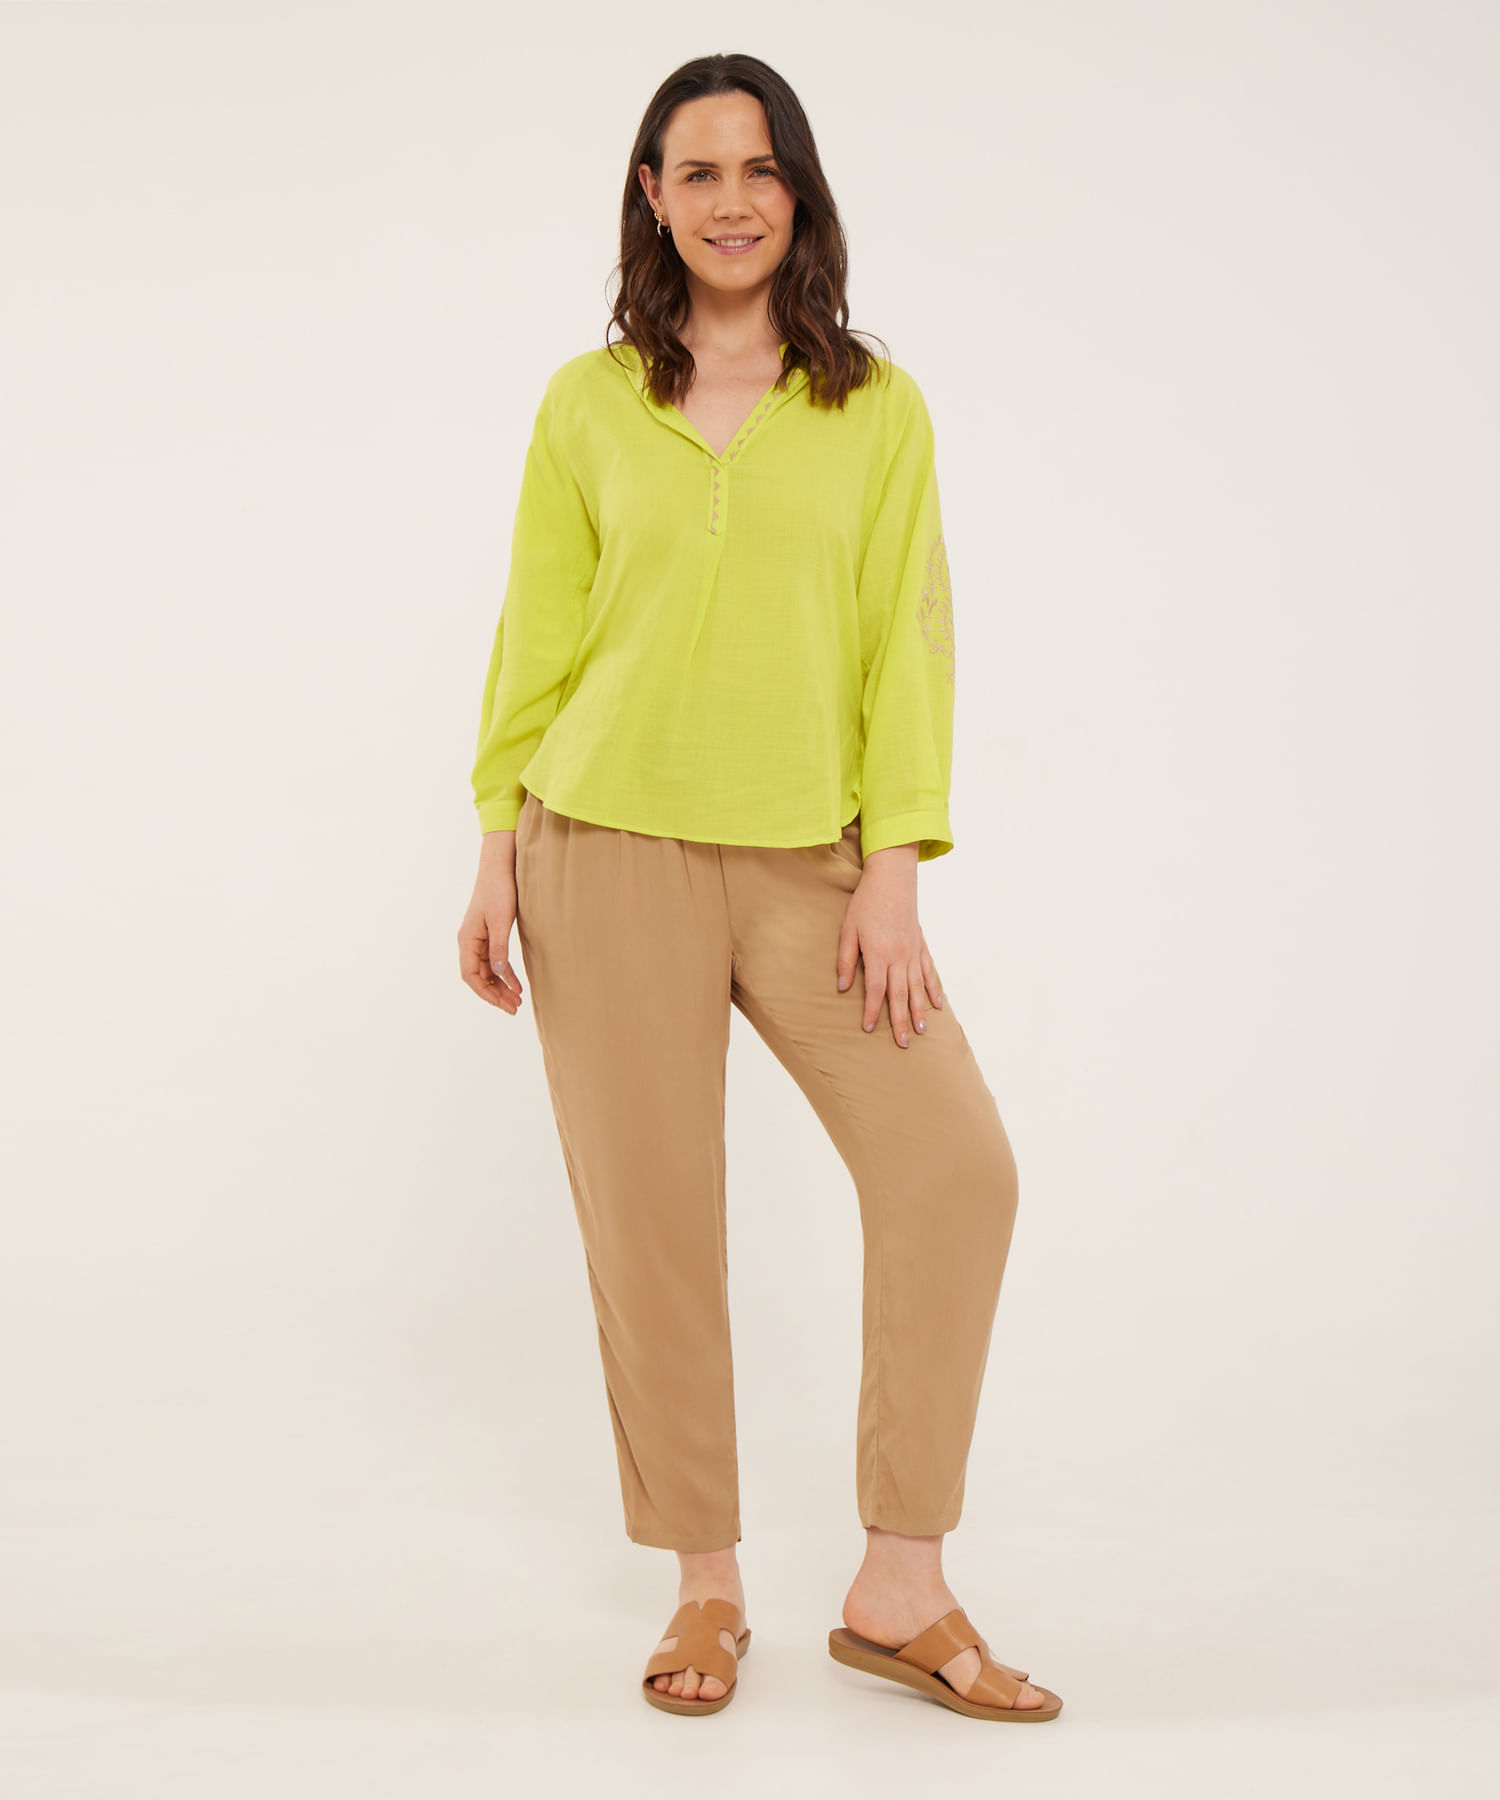 Pantalon Mujer Patprimo Jogger Verde Viscosa - Compra Ahora